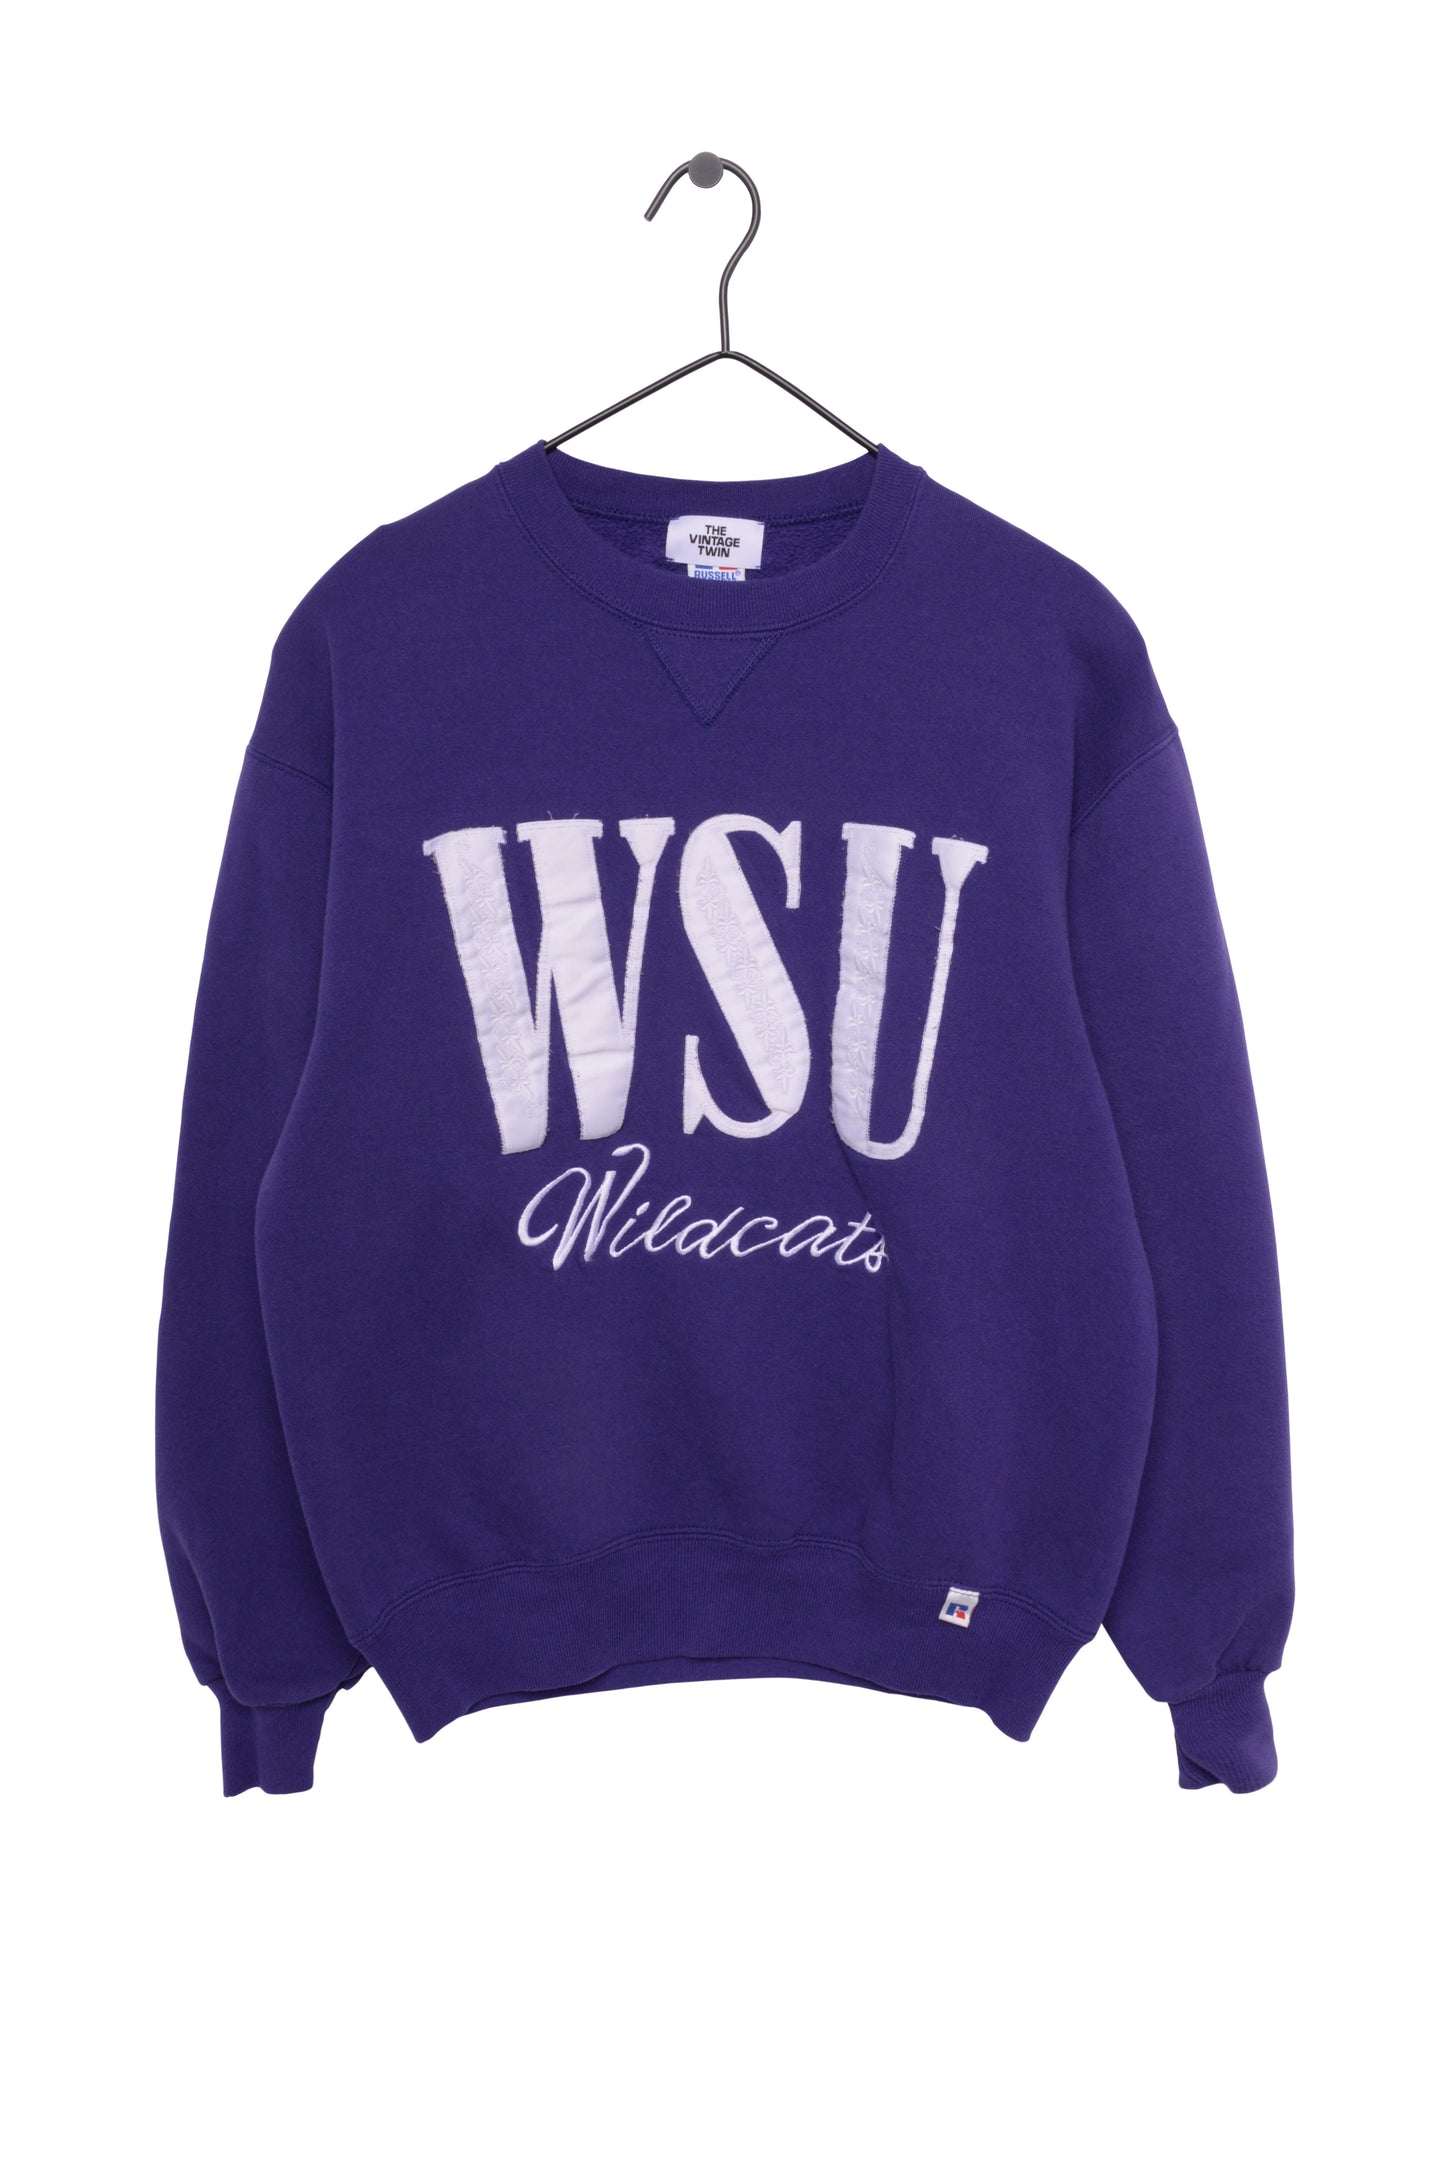 WSU Wildcats Sweatshirt USA